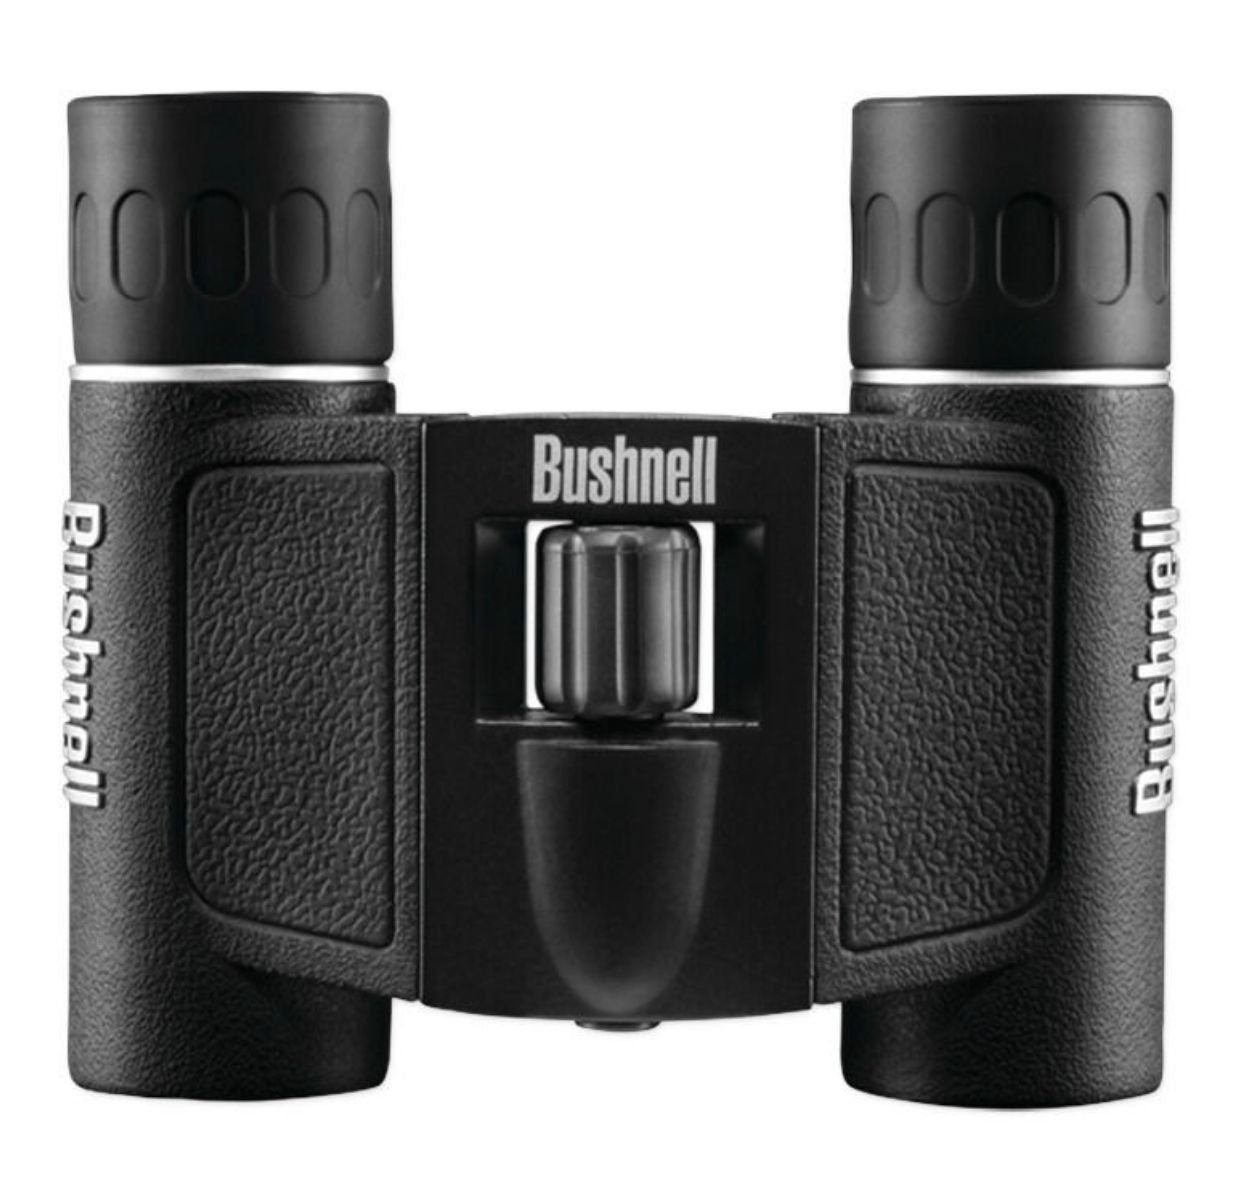 Bushnell Binoculars Powerview 8x21 (132514) - Limited Lifetime Warranty